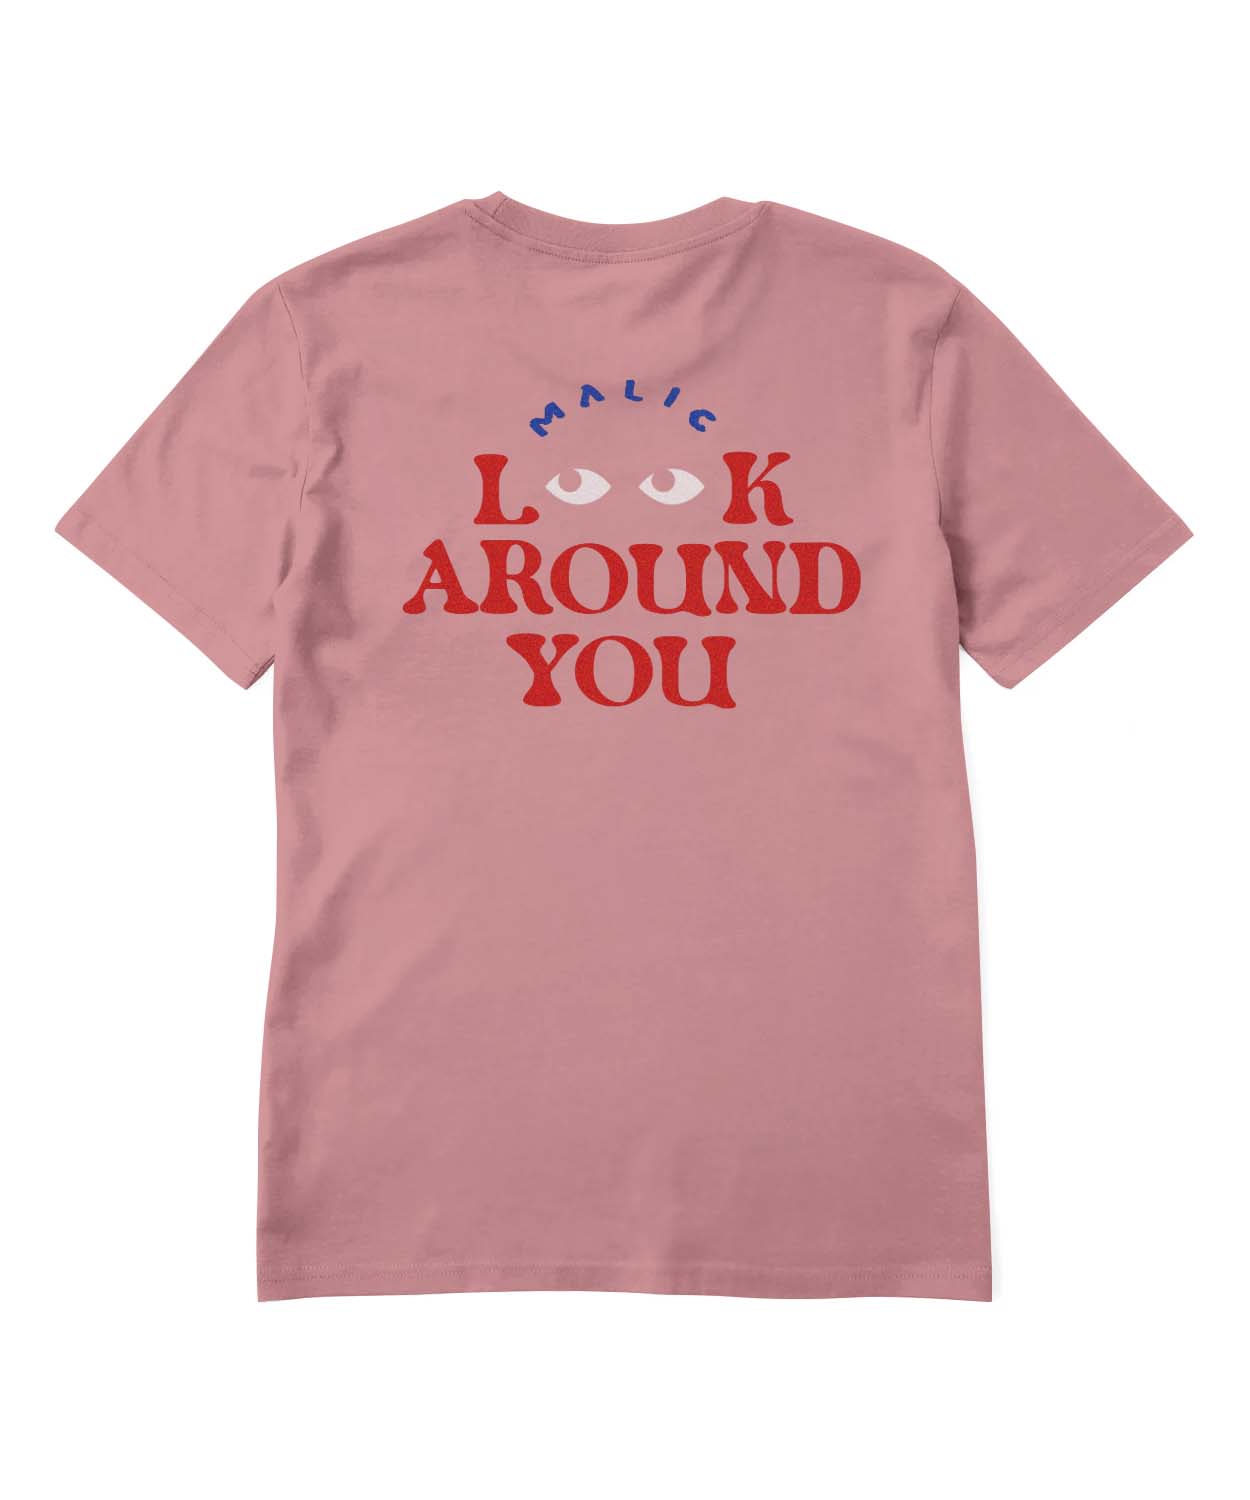 Camiseta LOOK AROUND rosa canyon